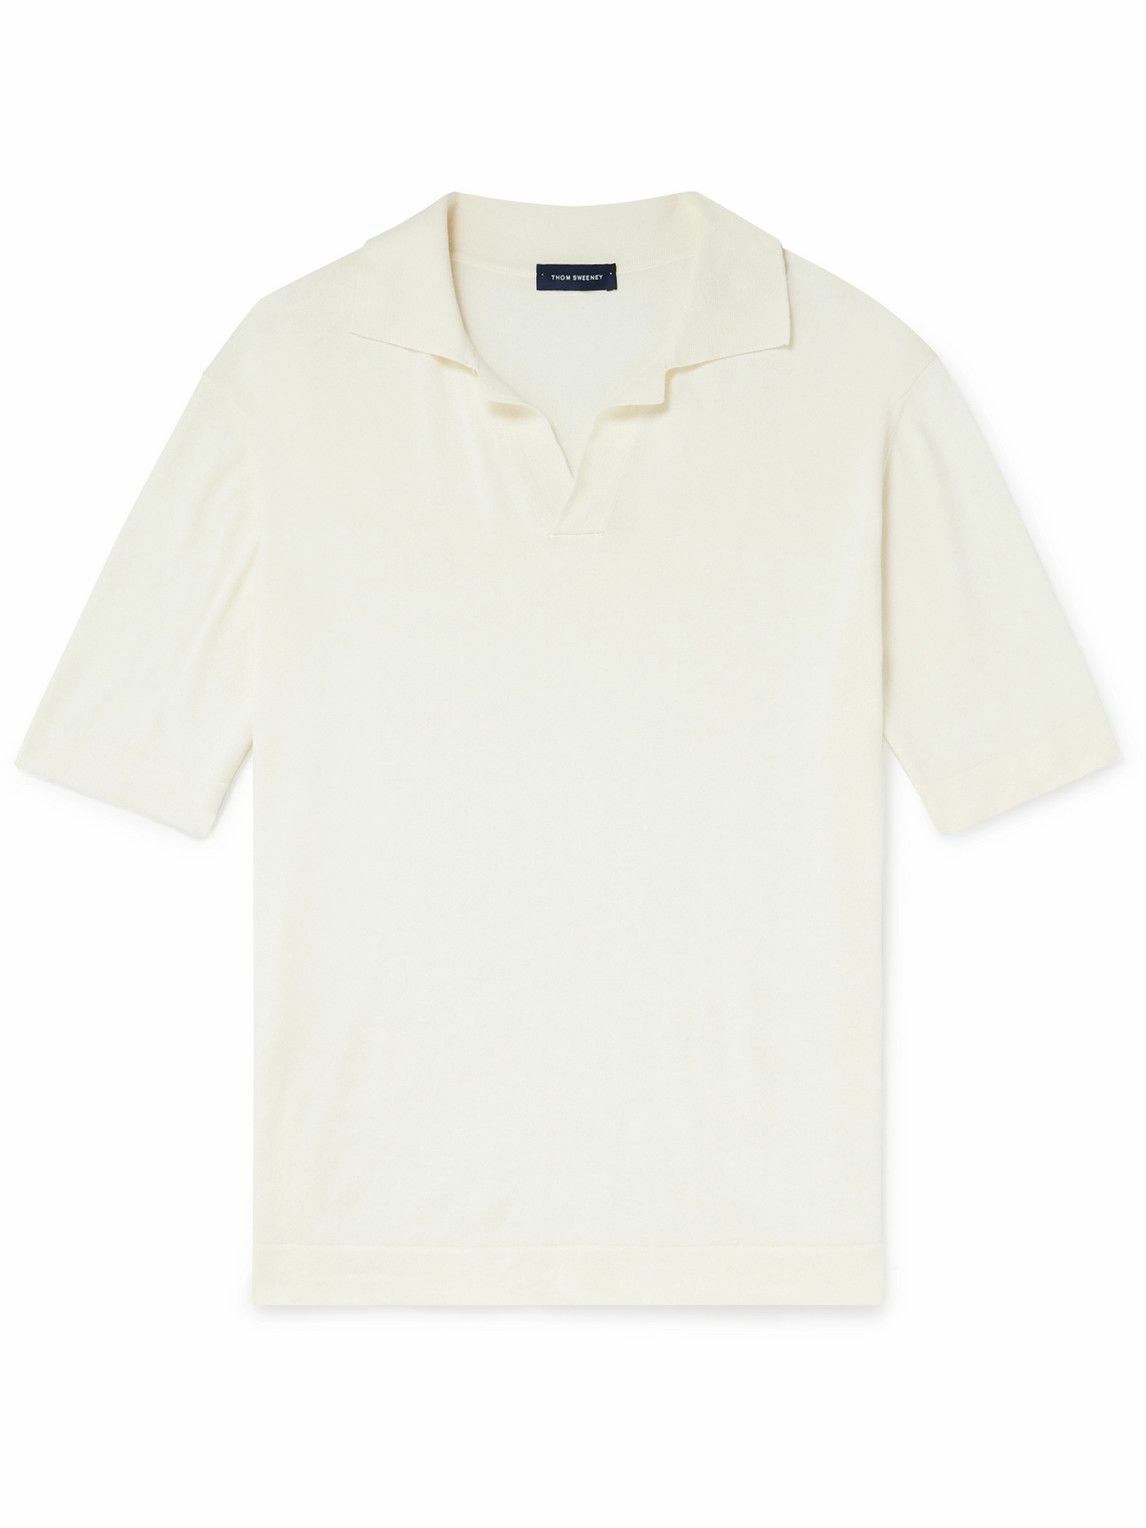 Thom Sweeney - Skipper Cotton Polo Shirt - Neutrals Thom Sweeney